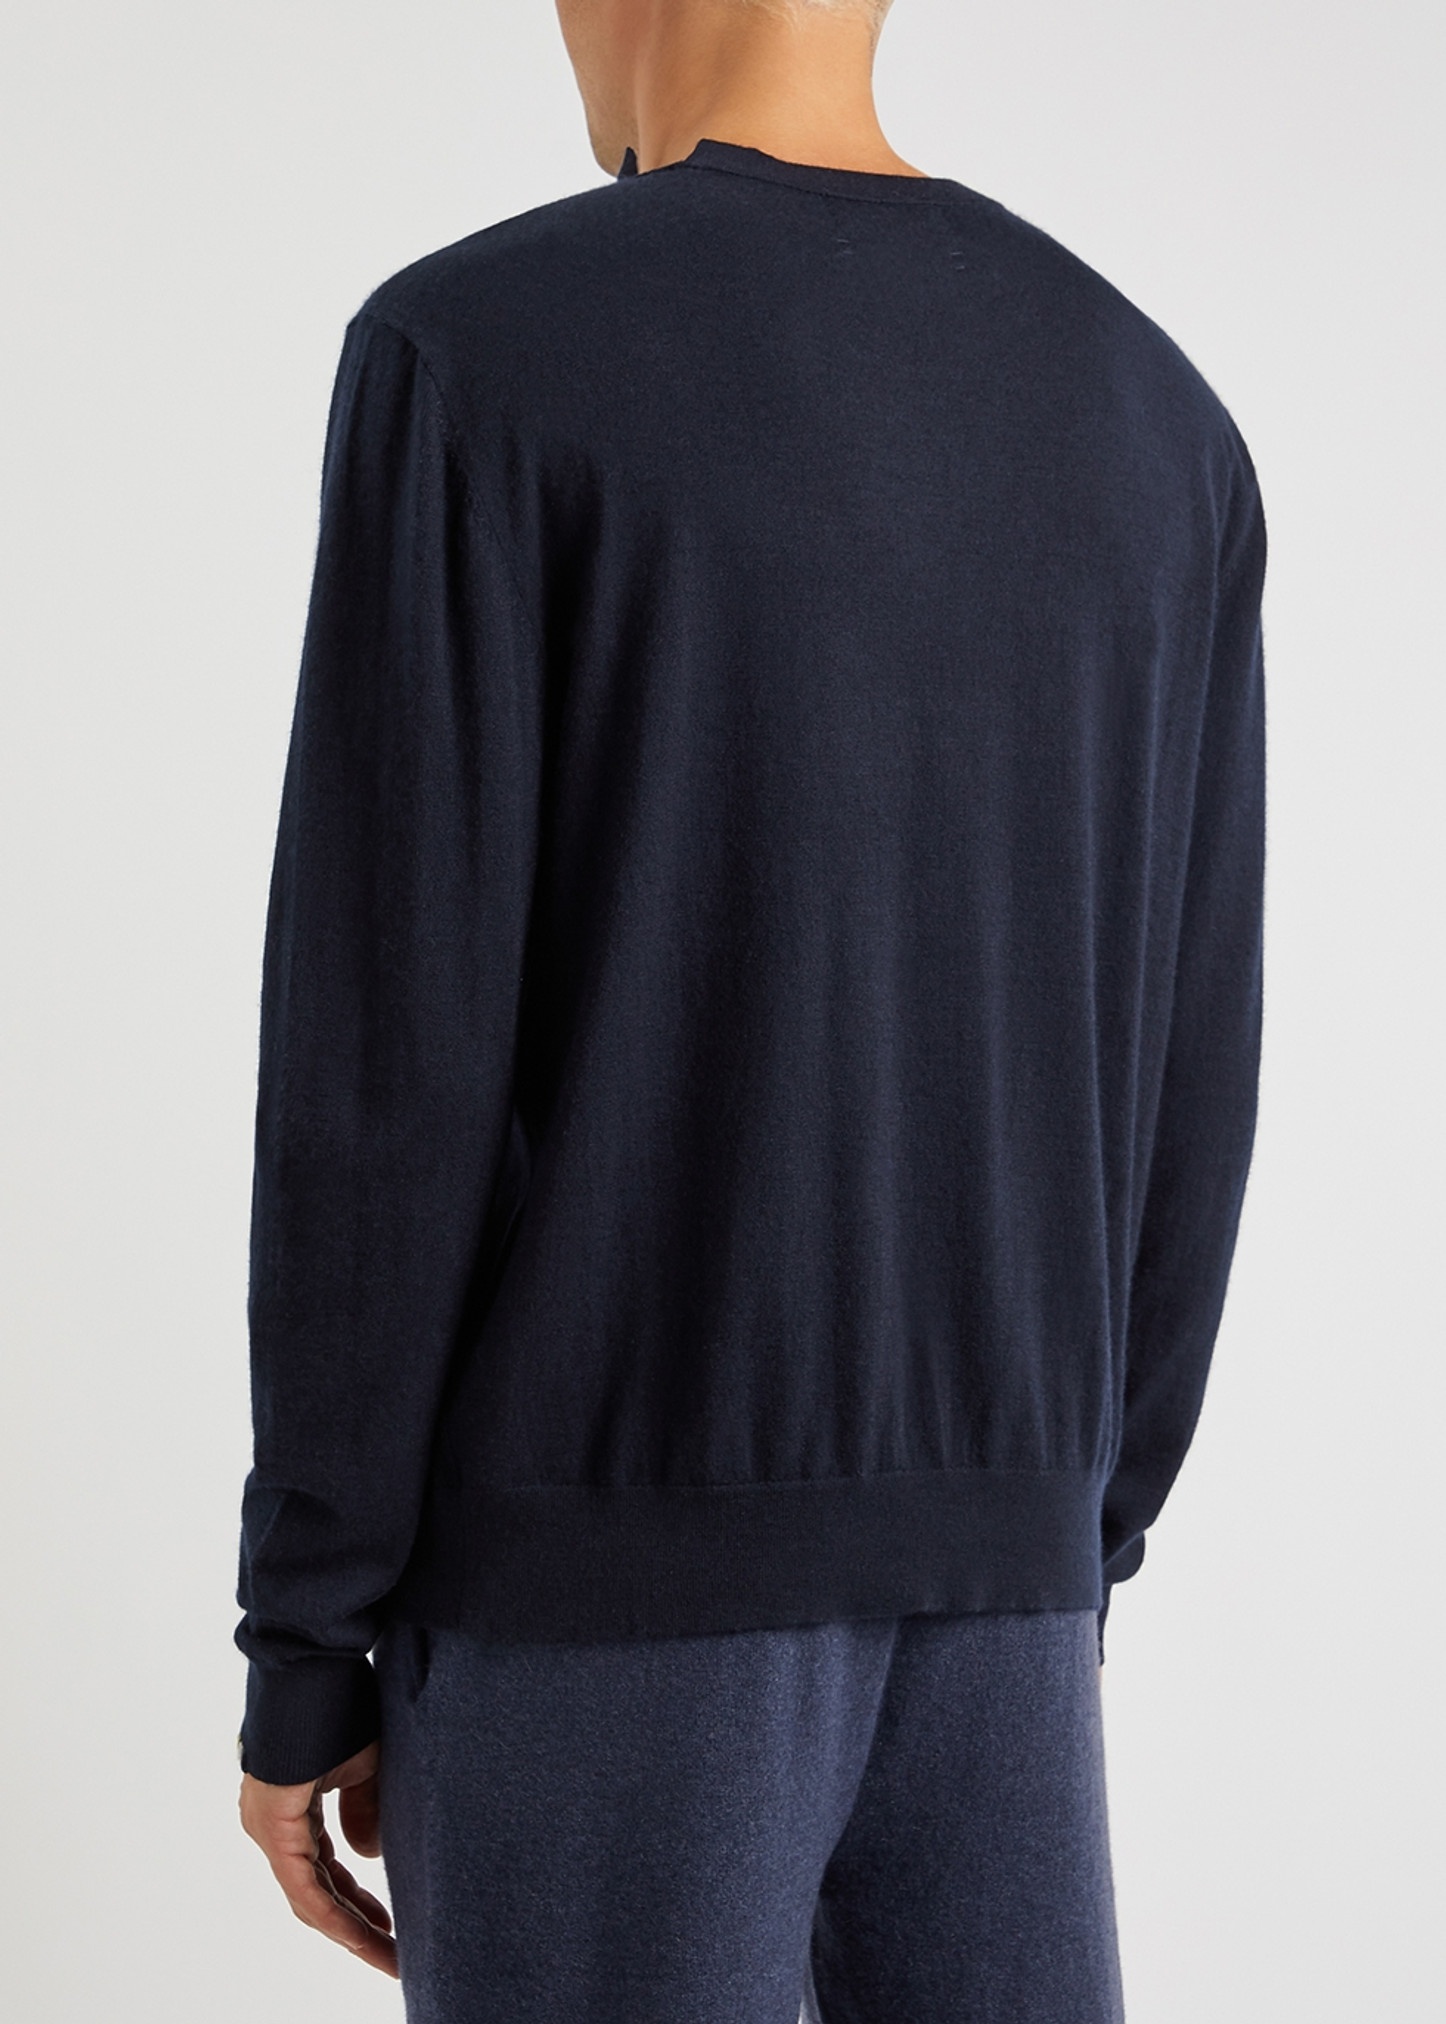 N°233 Class cashmere-blend jumper - 3